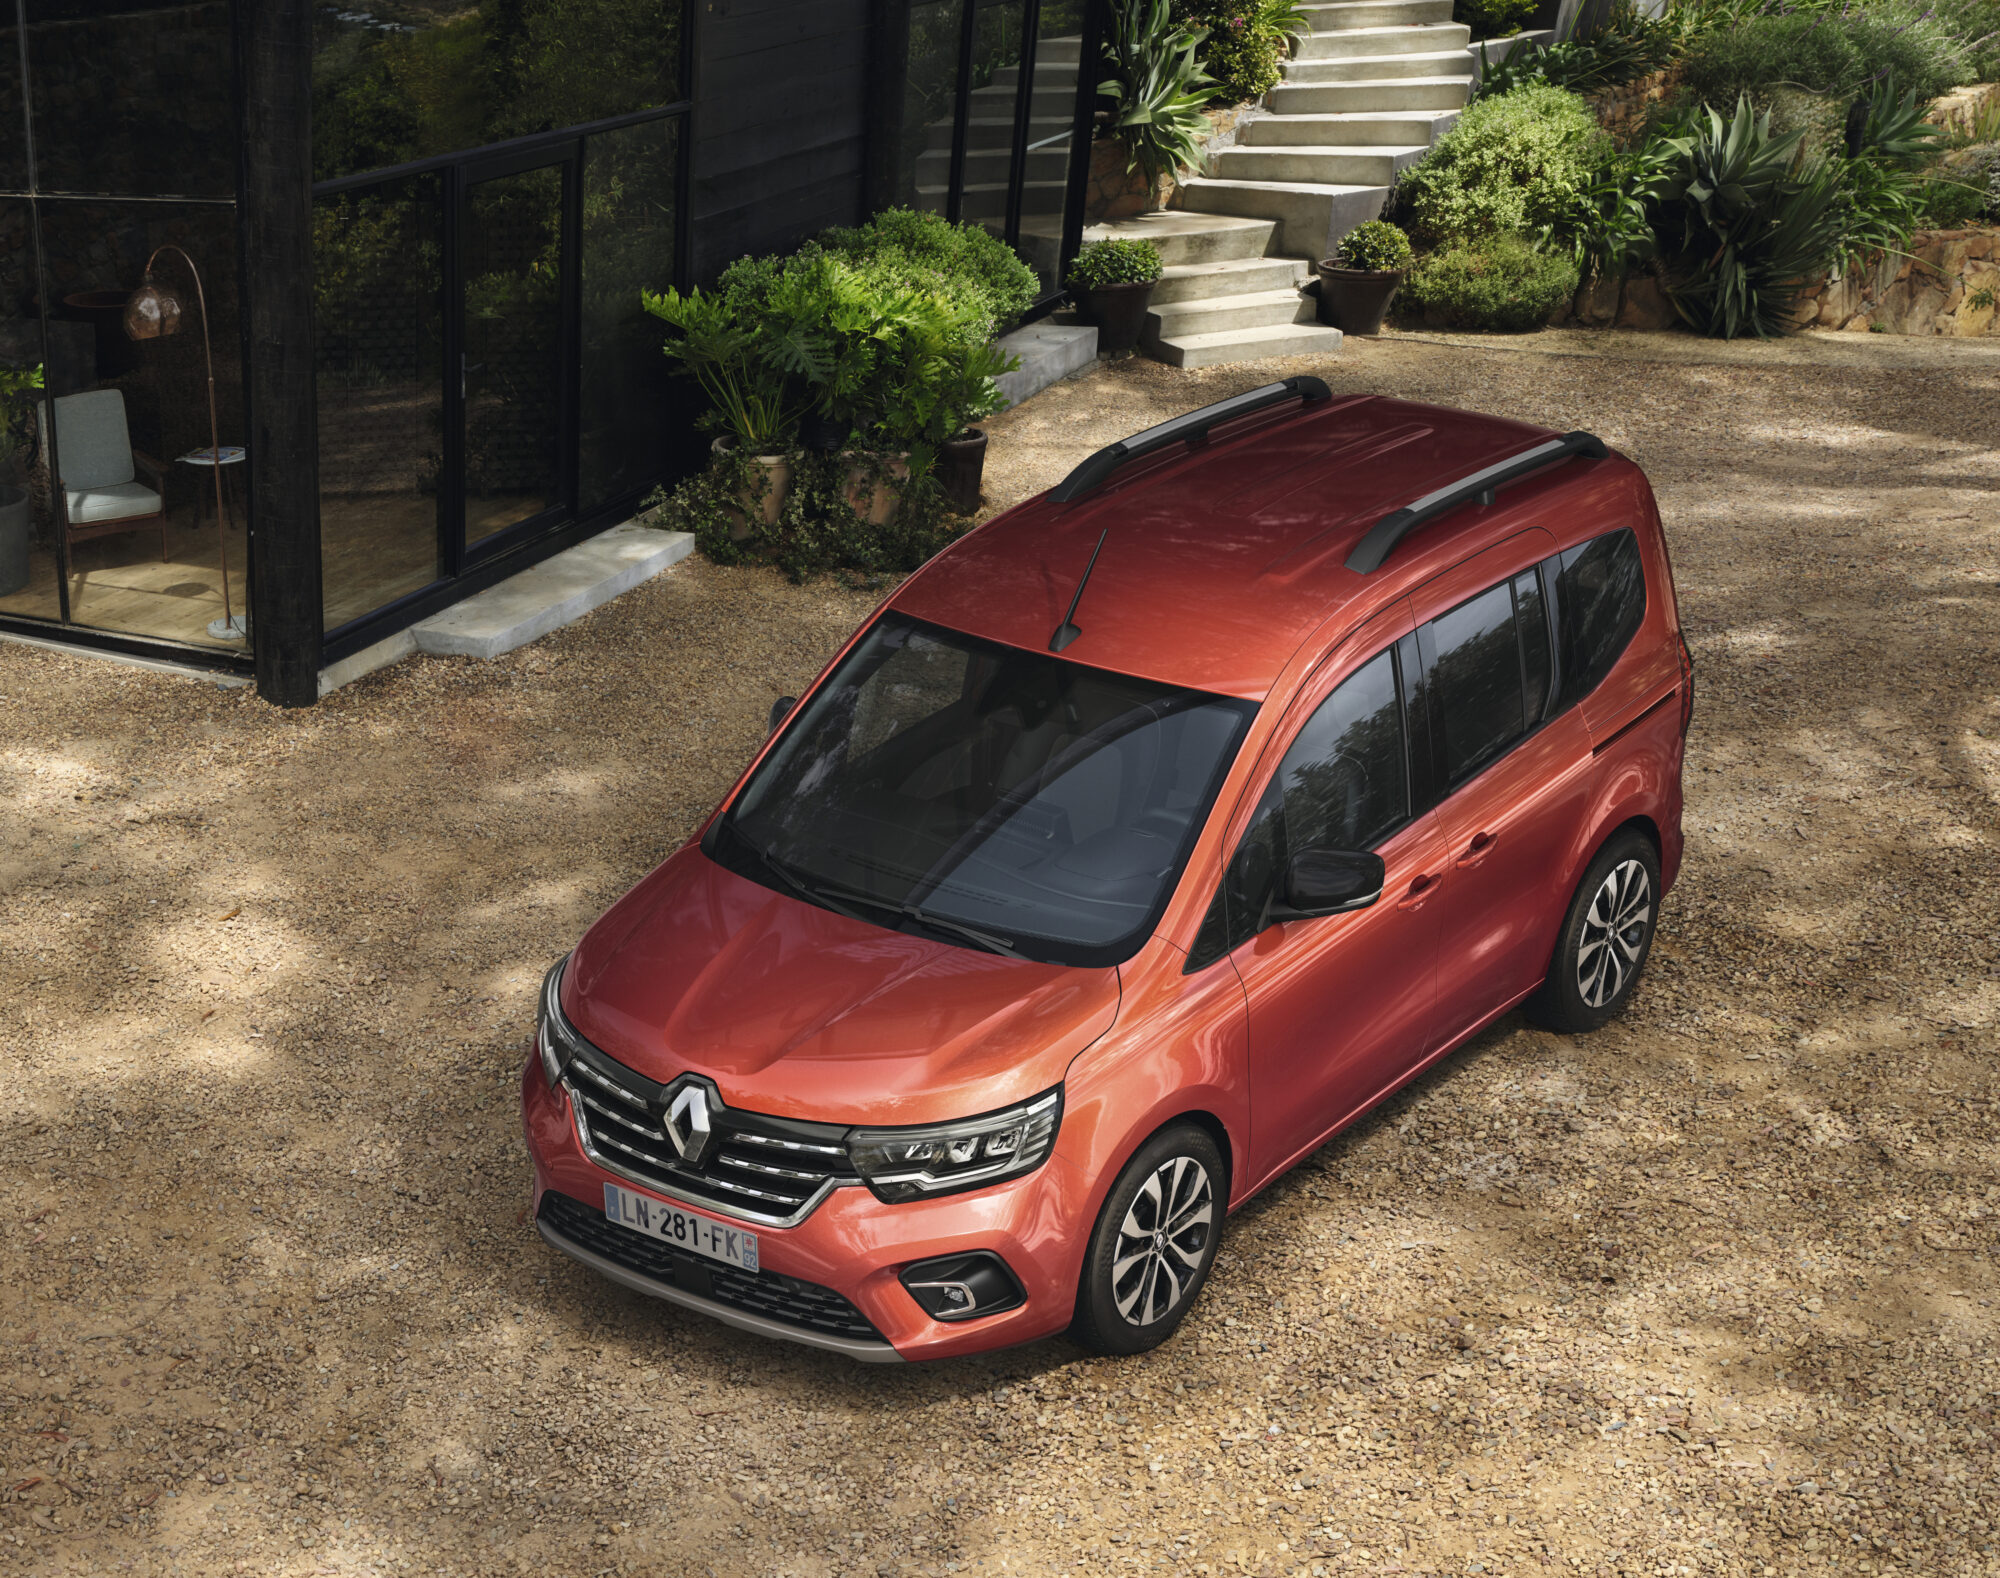 2021 - New Renault Kangoo - On location